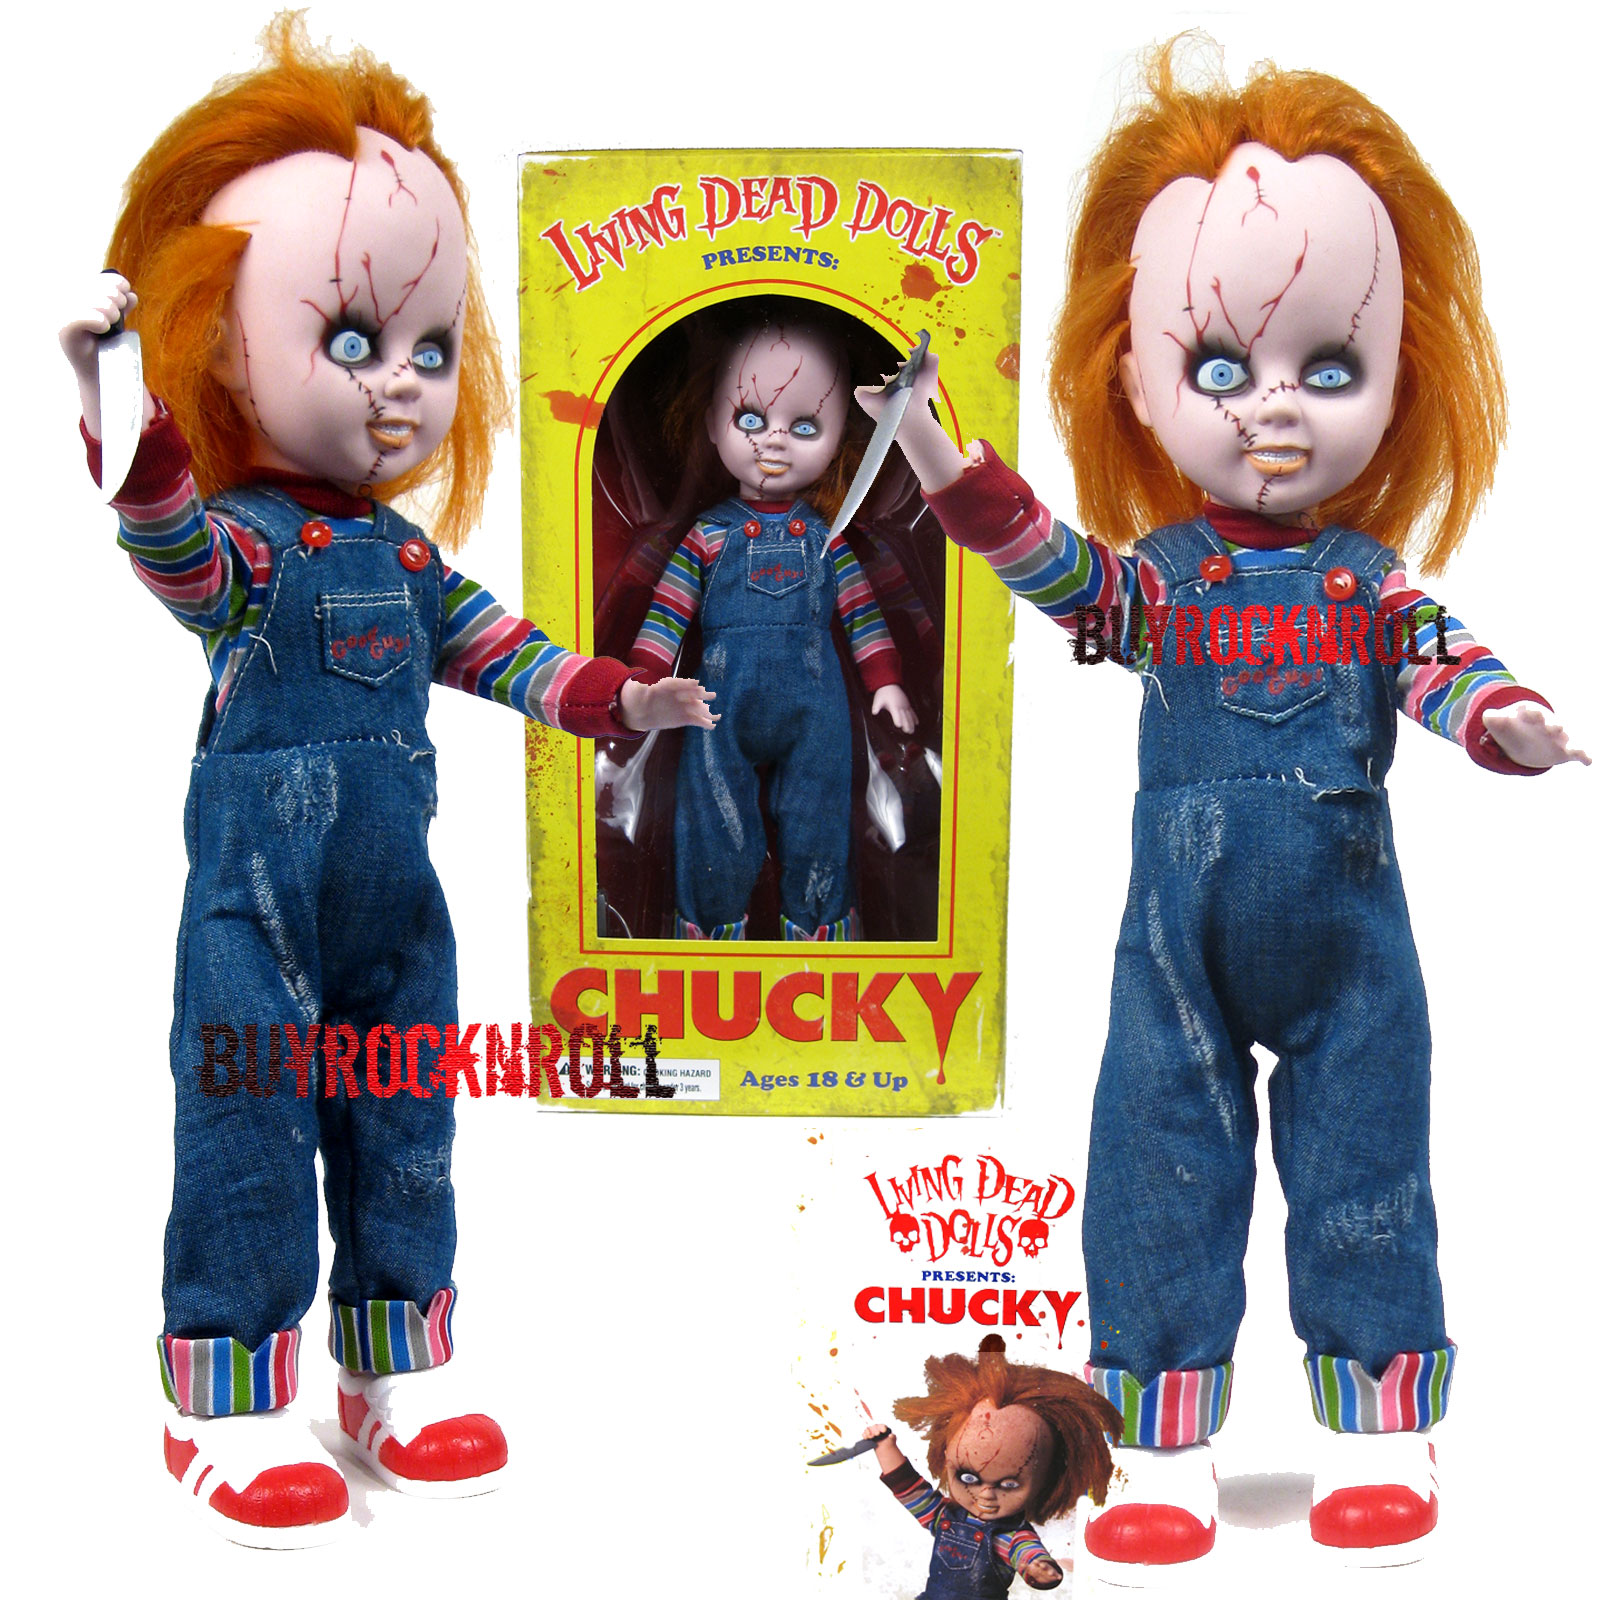 Chucky Dead